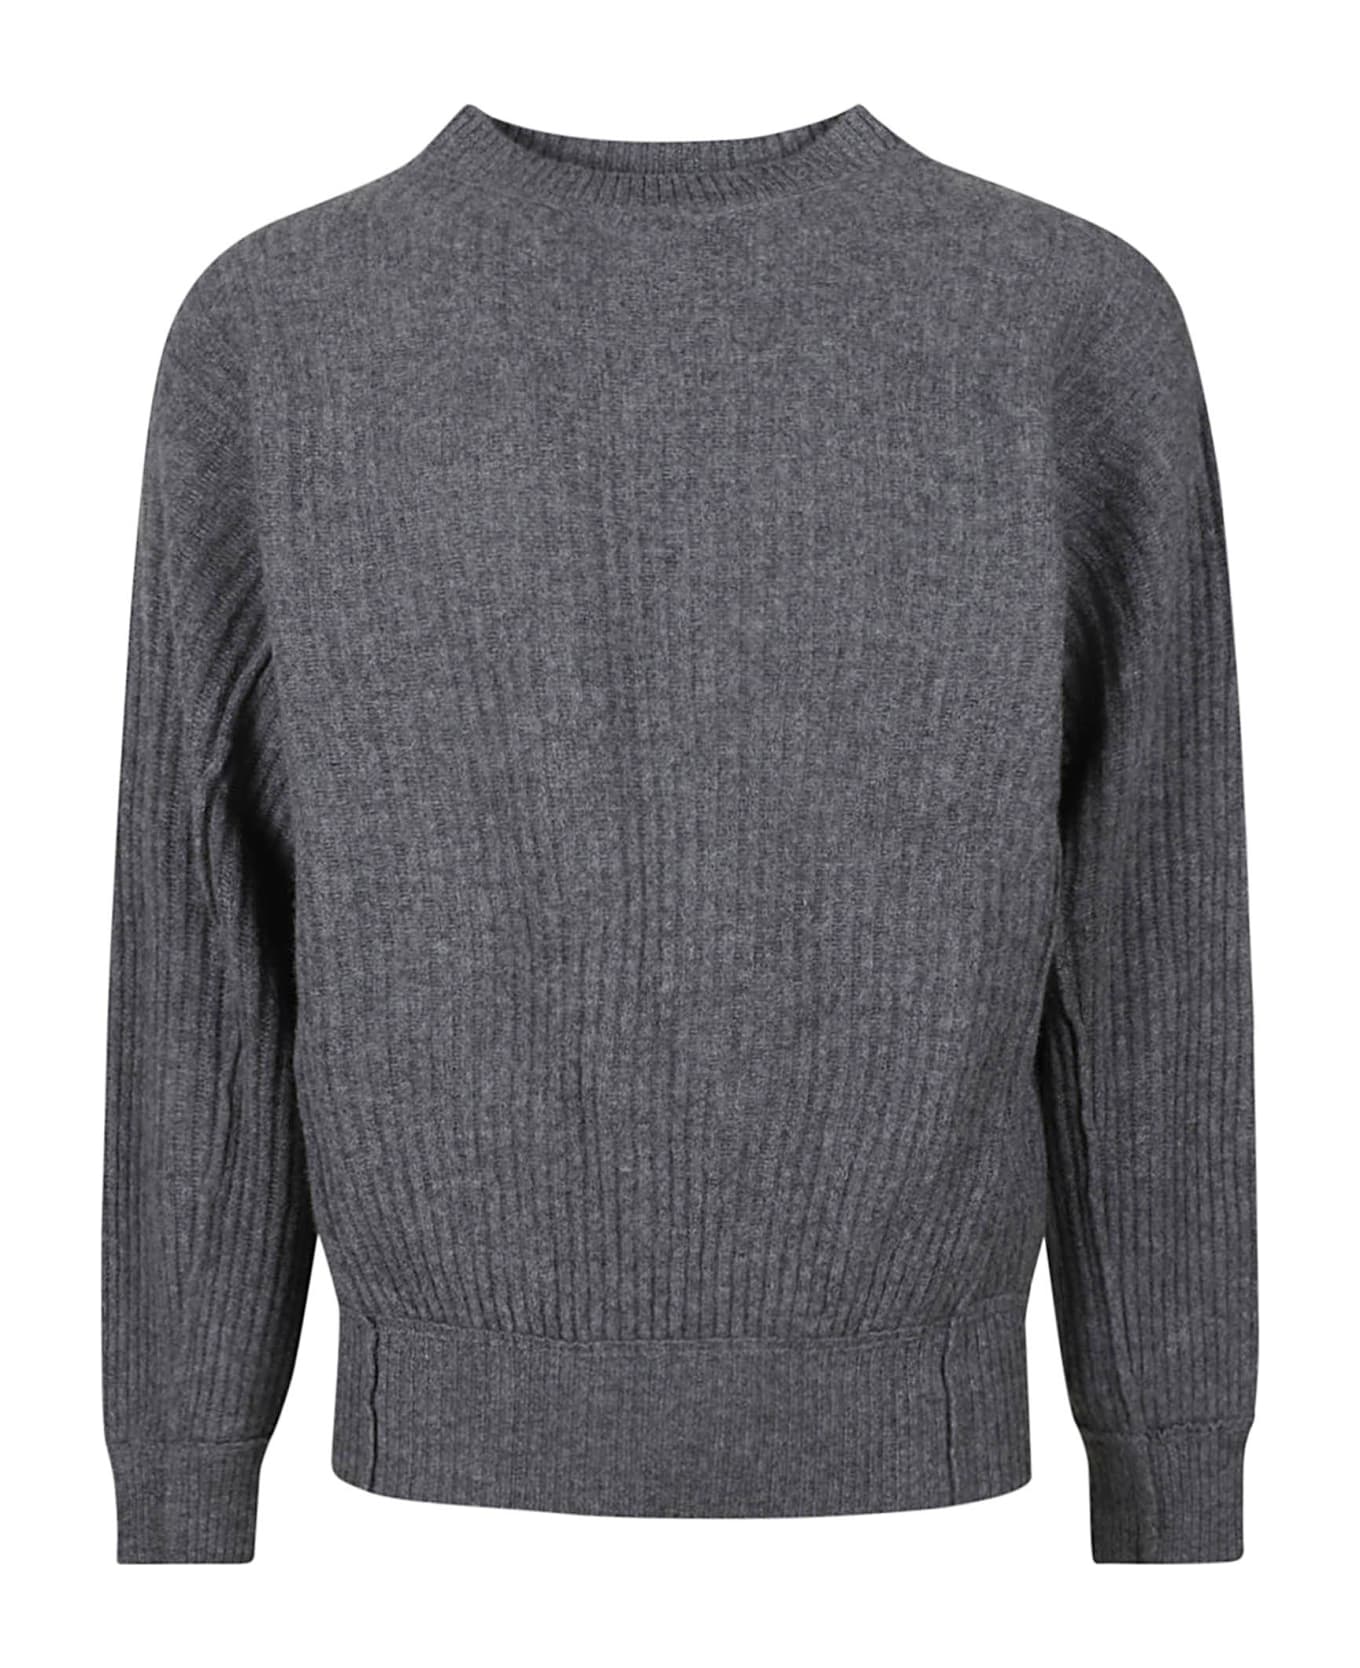 Maison Flaneur Ribbed Knit Sweater - Dark Grey